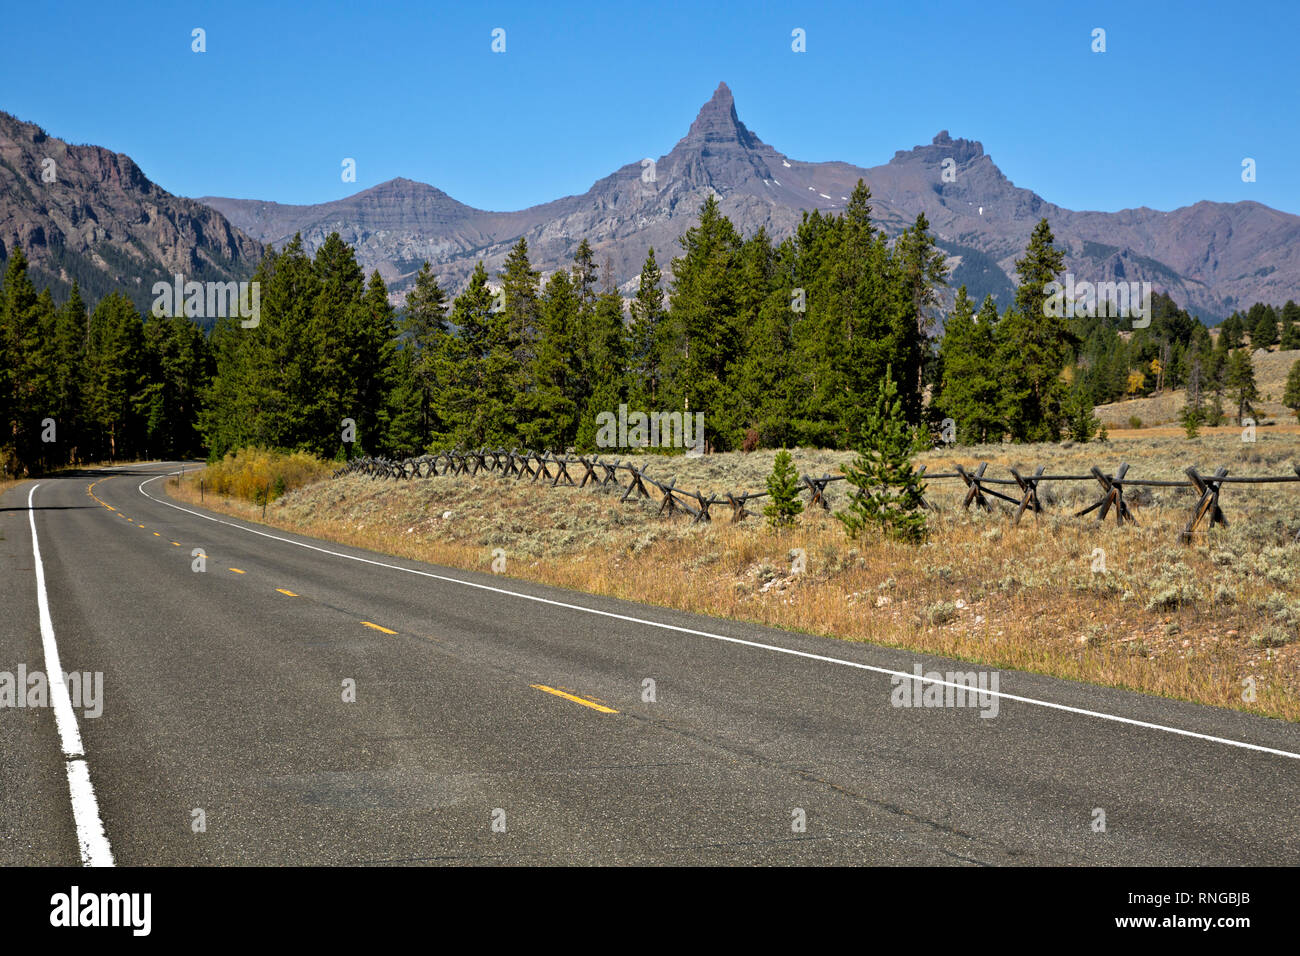 WY03786-00...WYOMING - The Beartooth Highway dans la Clark Fork Yellowstone River Valley de la forêt nationale de Shoshone. Banque D'Images